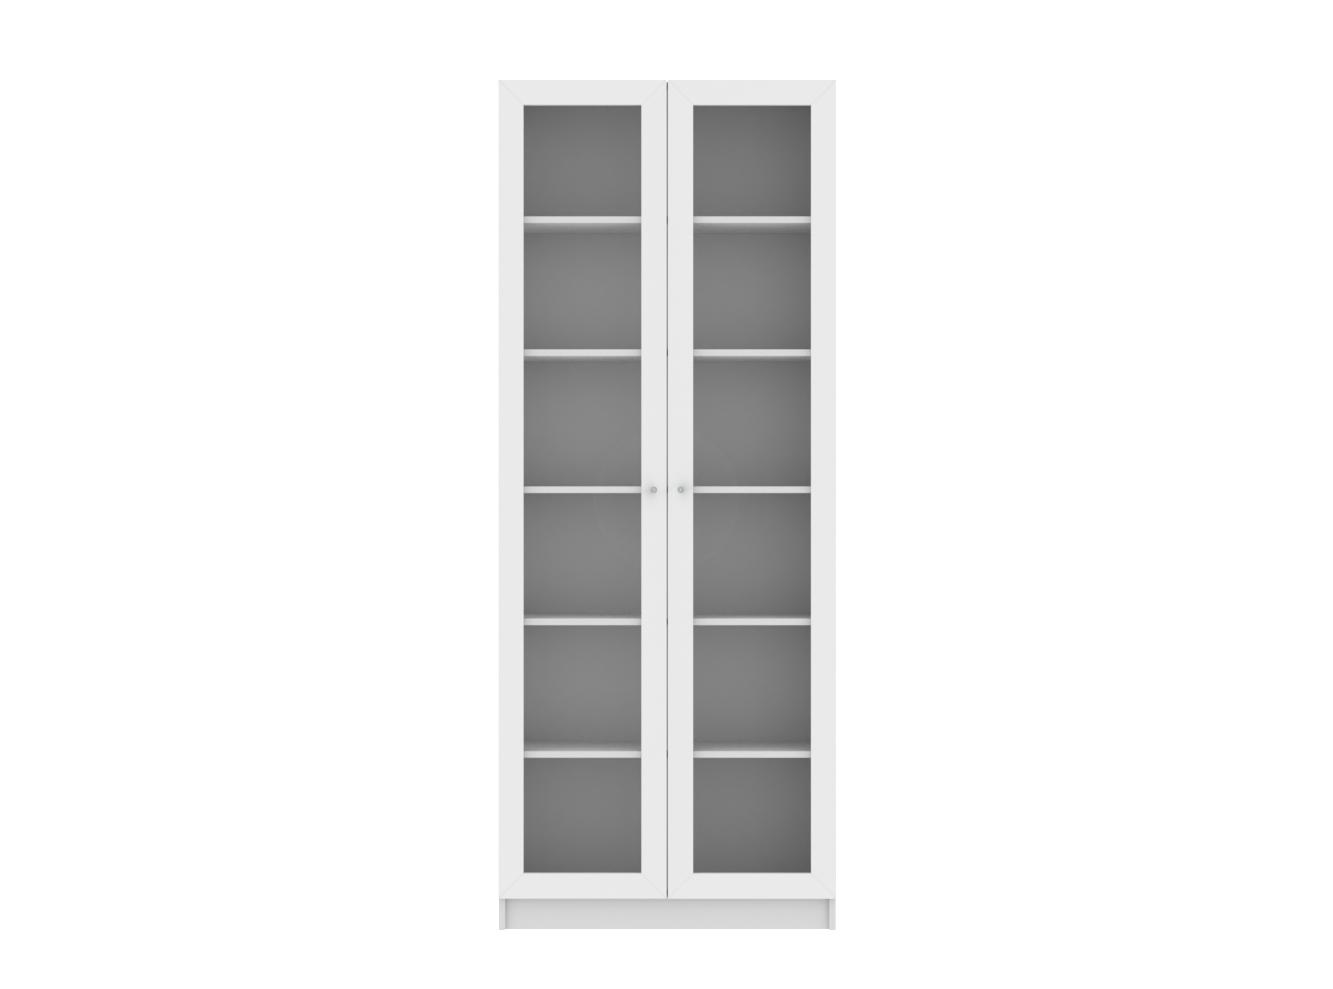  Книжный шкаф Билли 20 white ИКЕА (IKEA) изображение товара